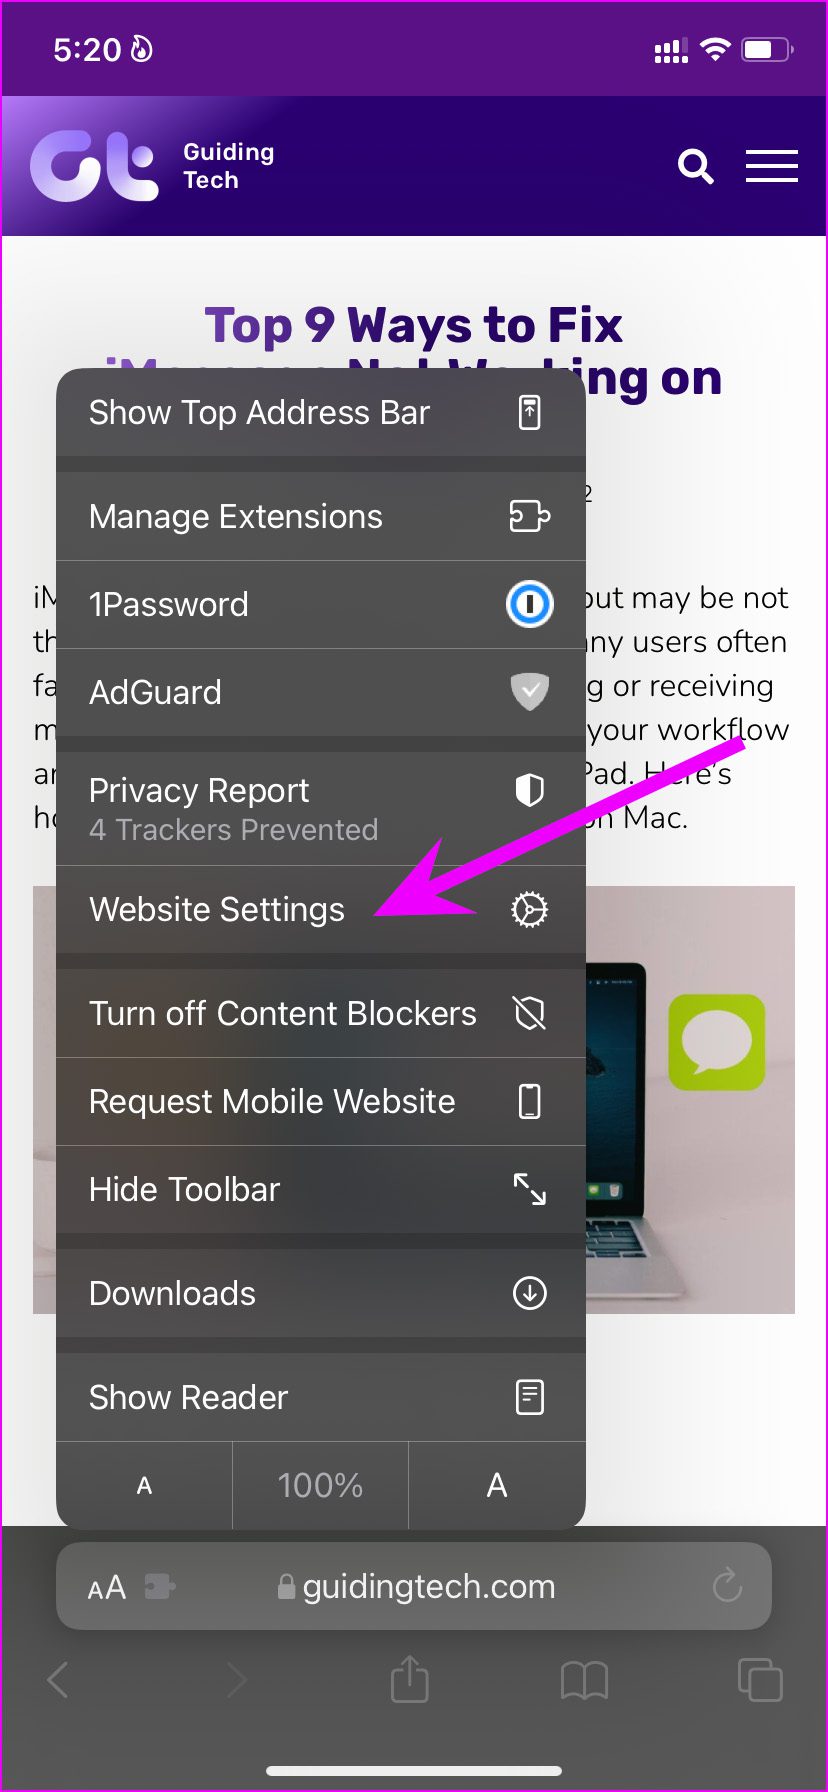 How To Request Desktop Site On iPhone (Safari & Google Chrome) 